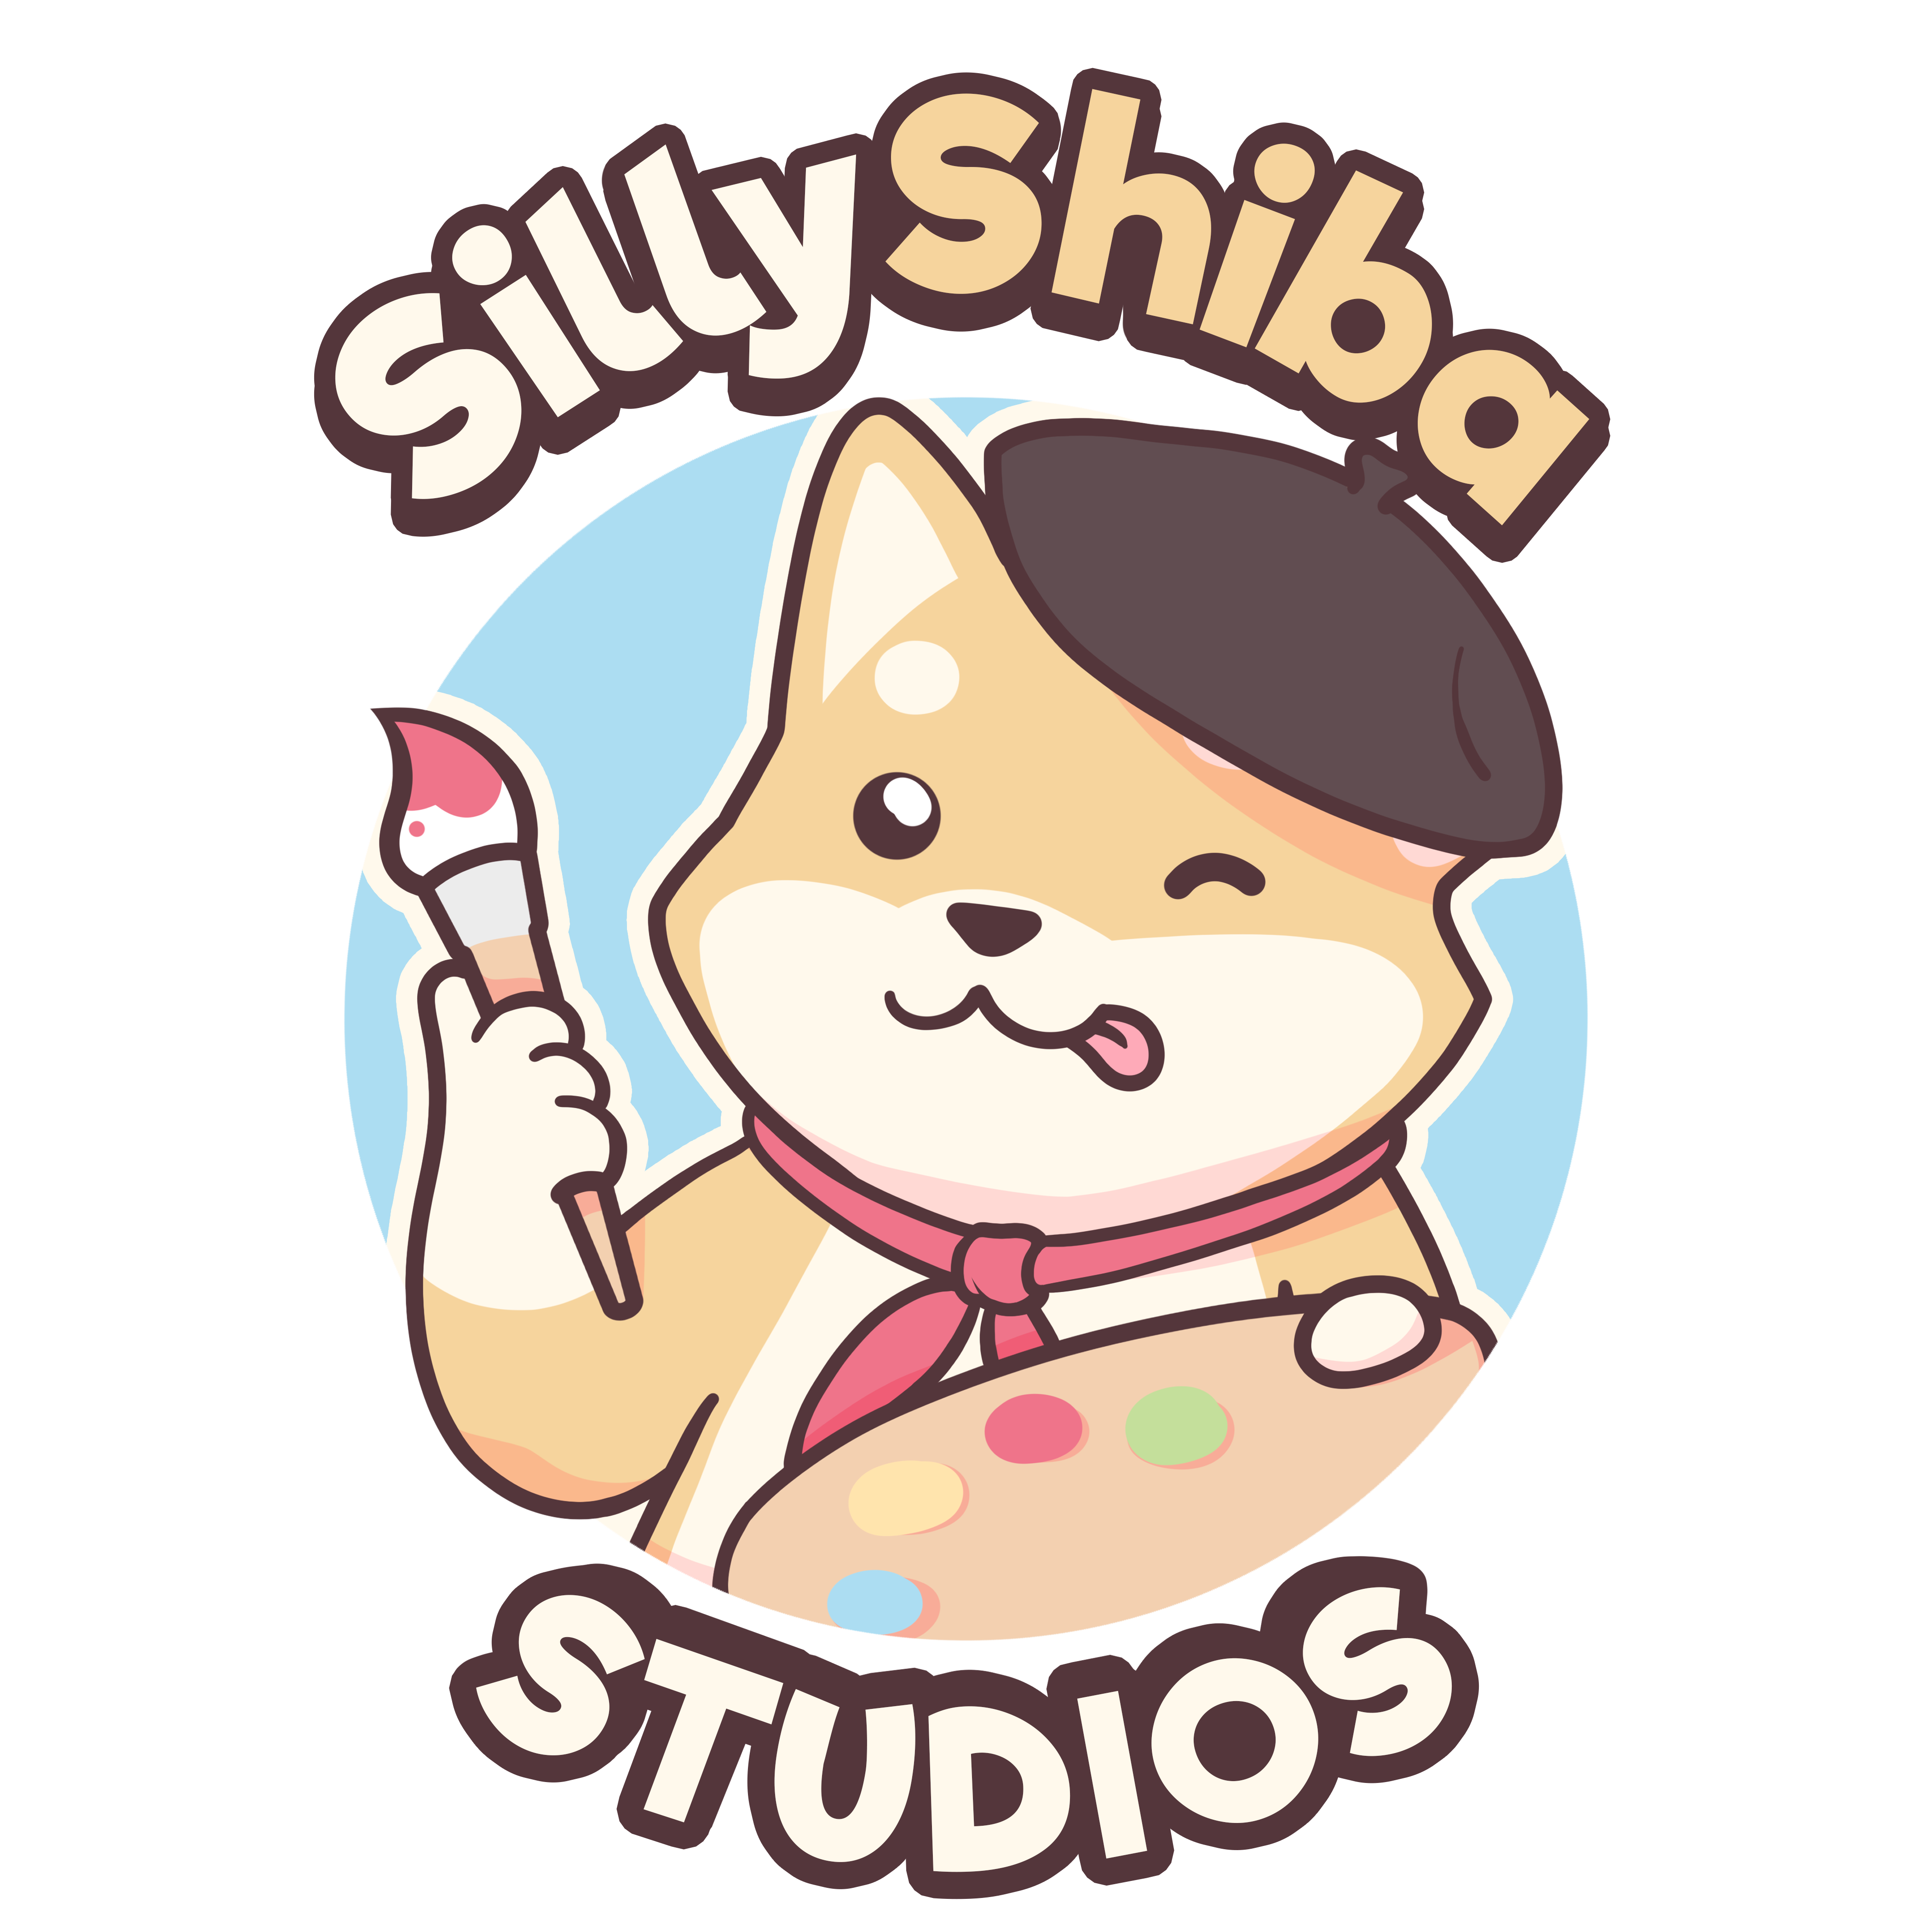 Silly Shiba Studios